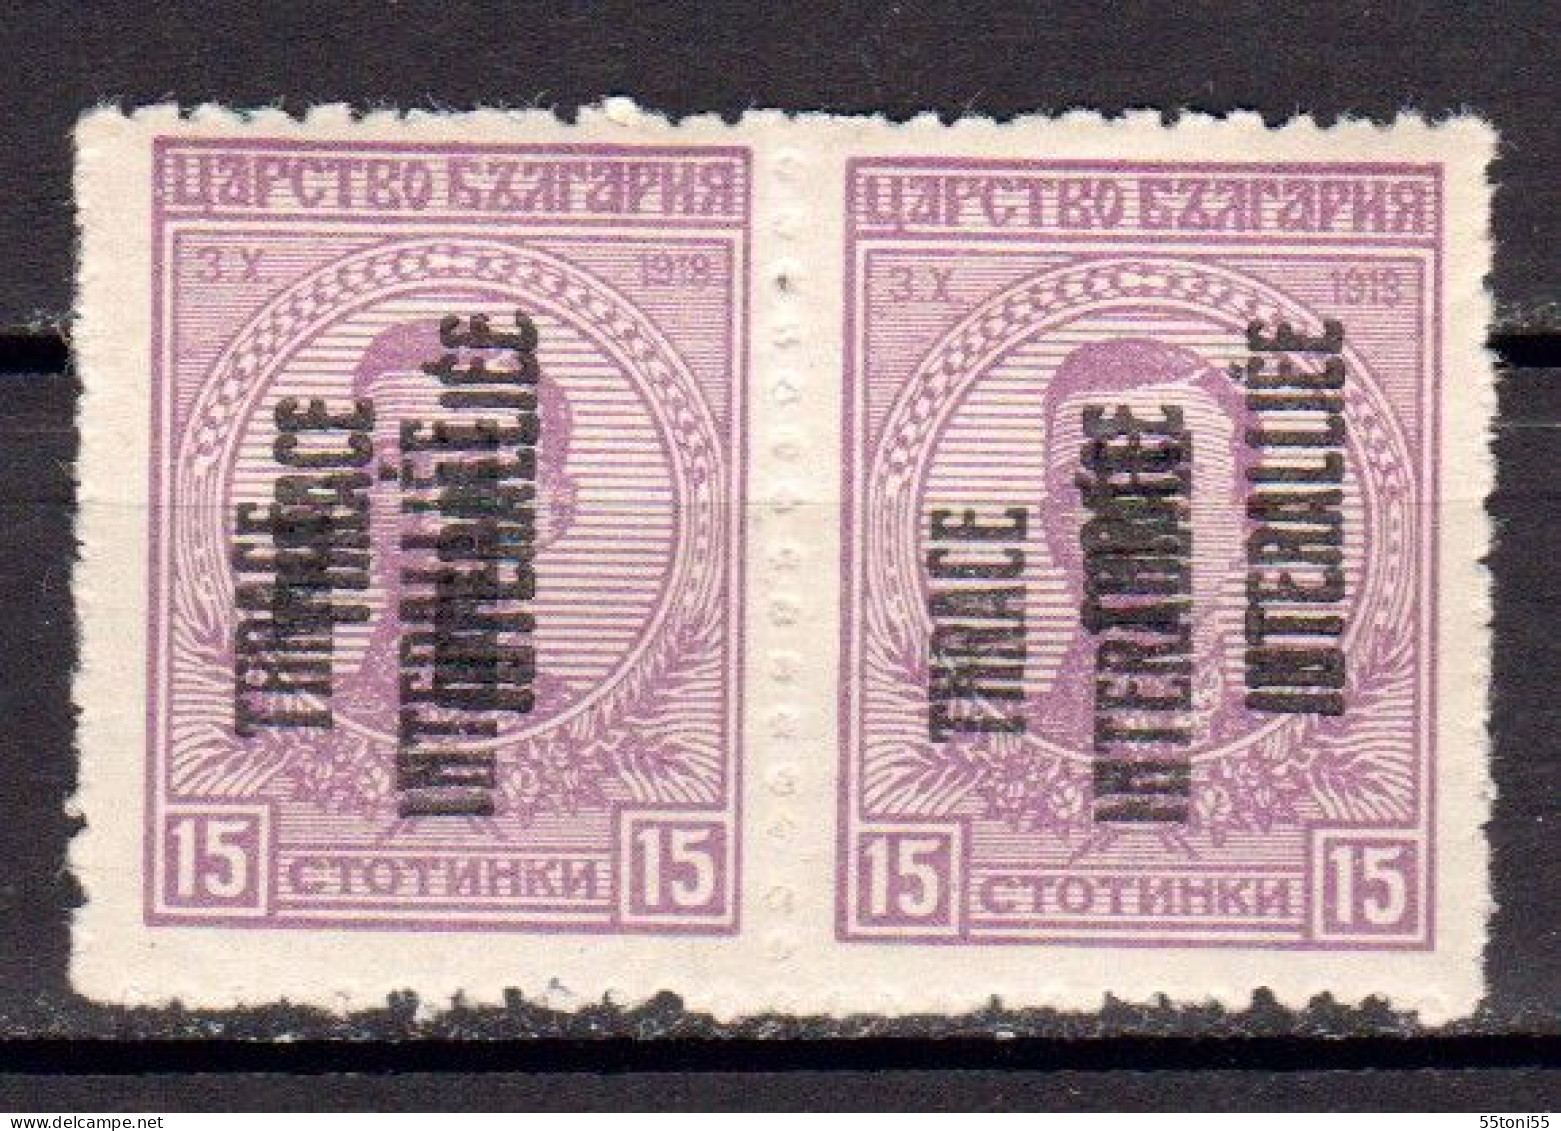 ERROR - Double Overprint 1920 THRACE OCCIDENTALE –15 St. -MNH( Pair )Bulgaria Bulgarie,Greece Grece - Variétés Et Curiosités